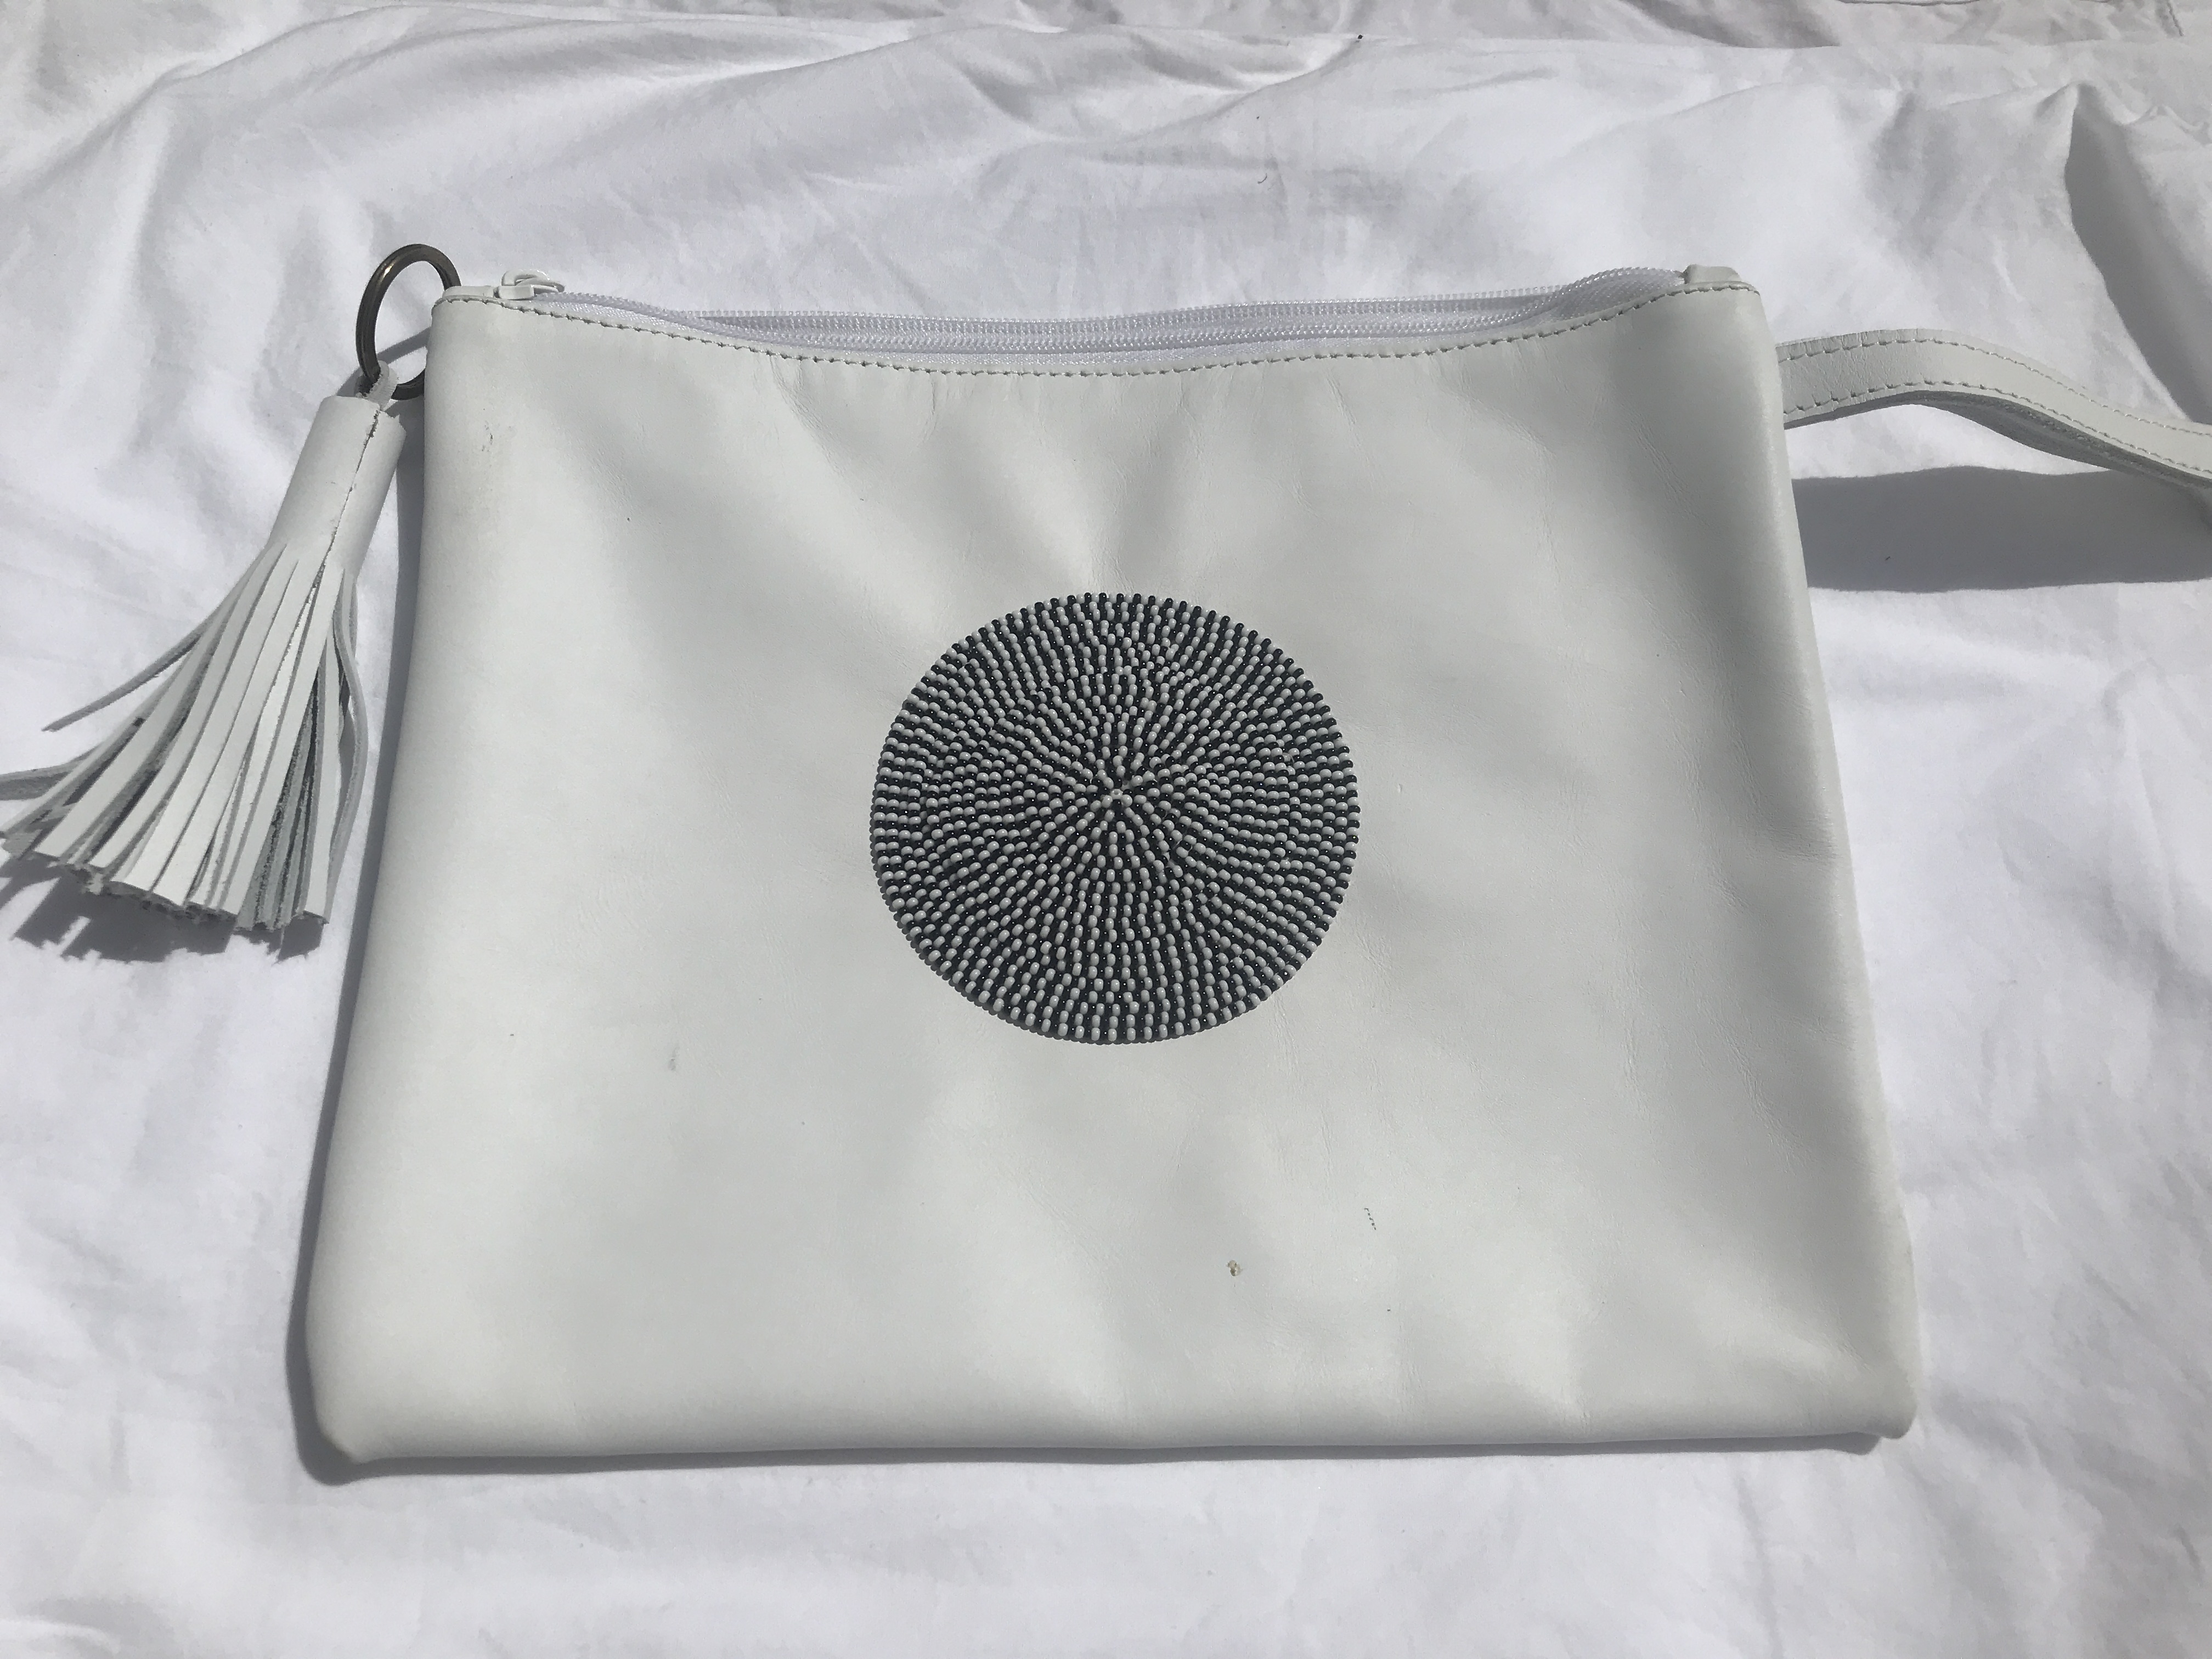 Ipad Leather bag -white